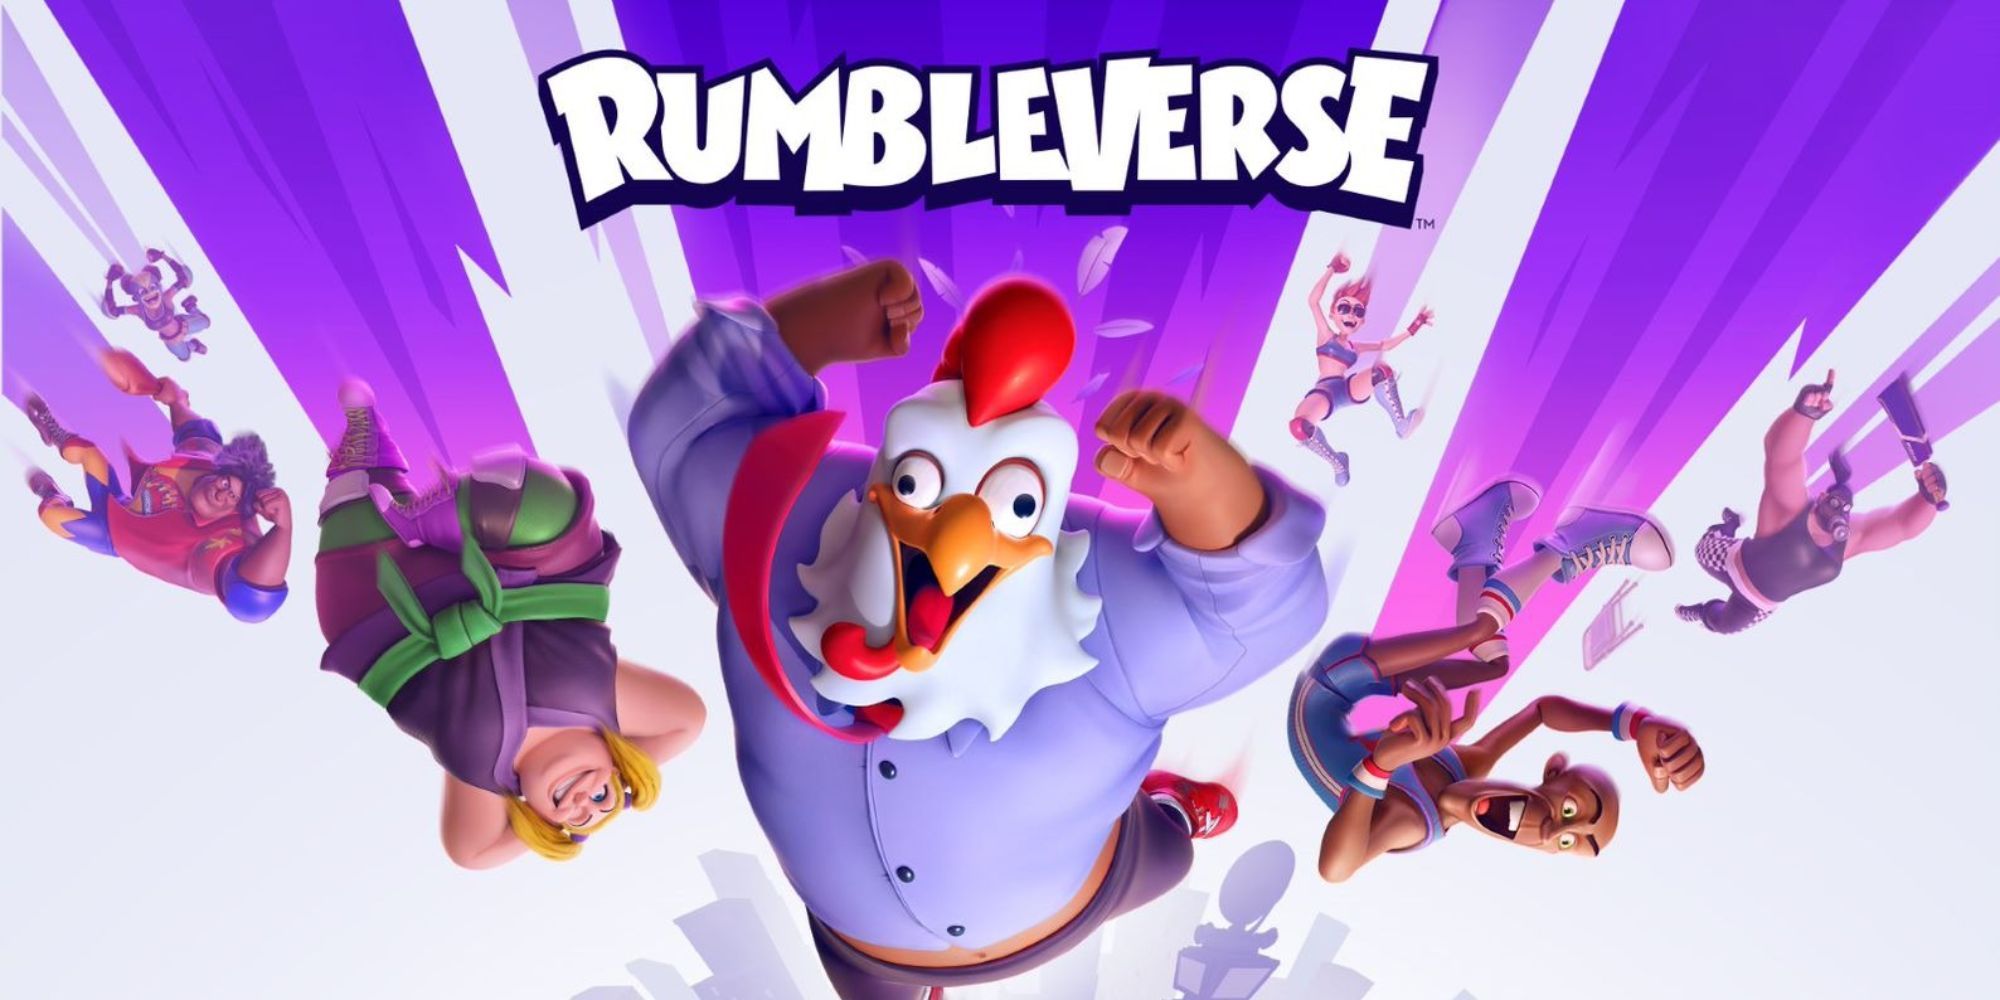 Rumbleverse splash screen showing multiple cartoony characters